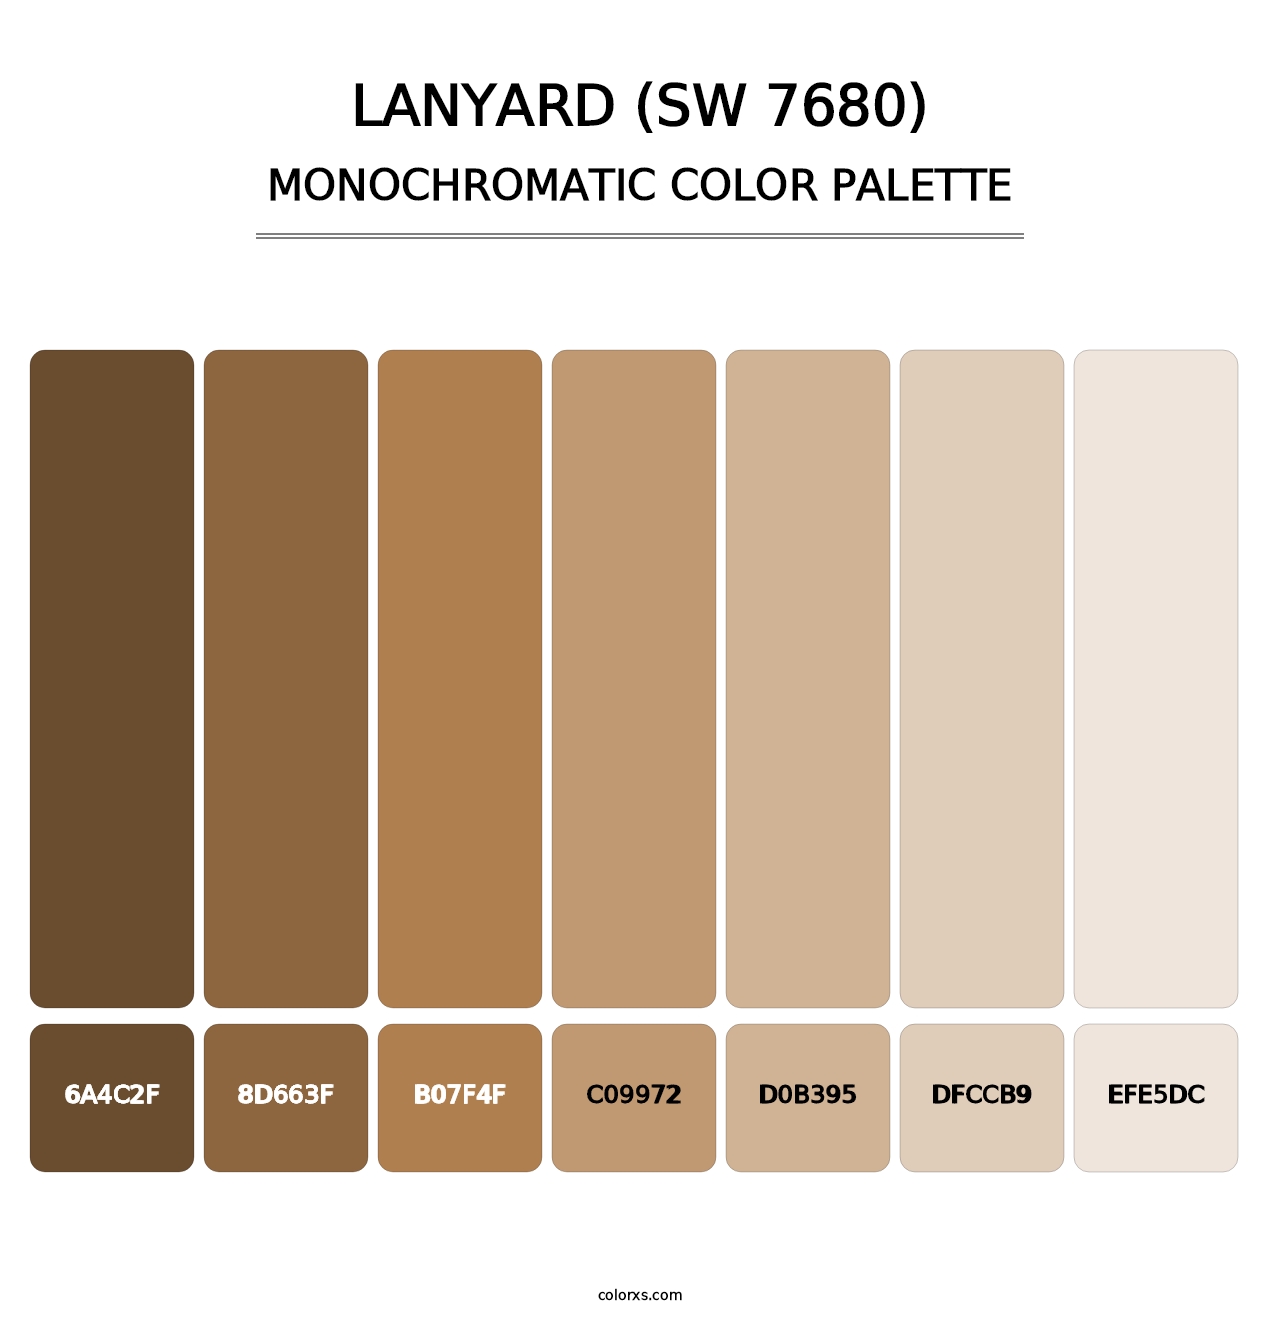 Lanyard (SW 7680) - Monochromatic Color Palette